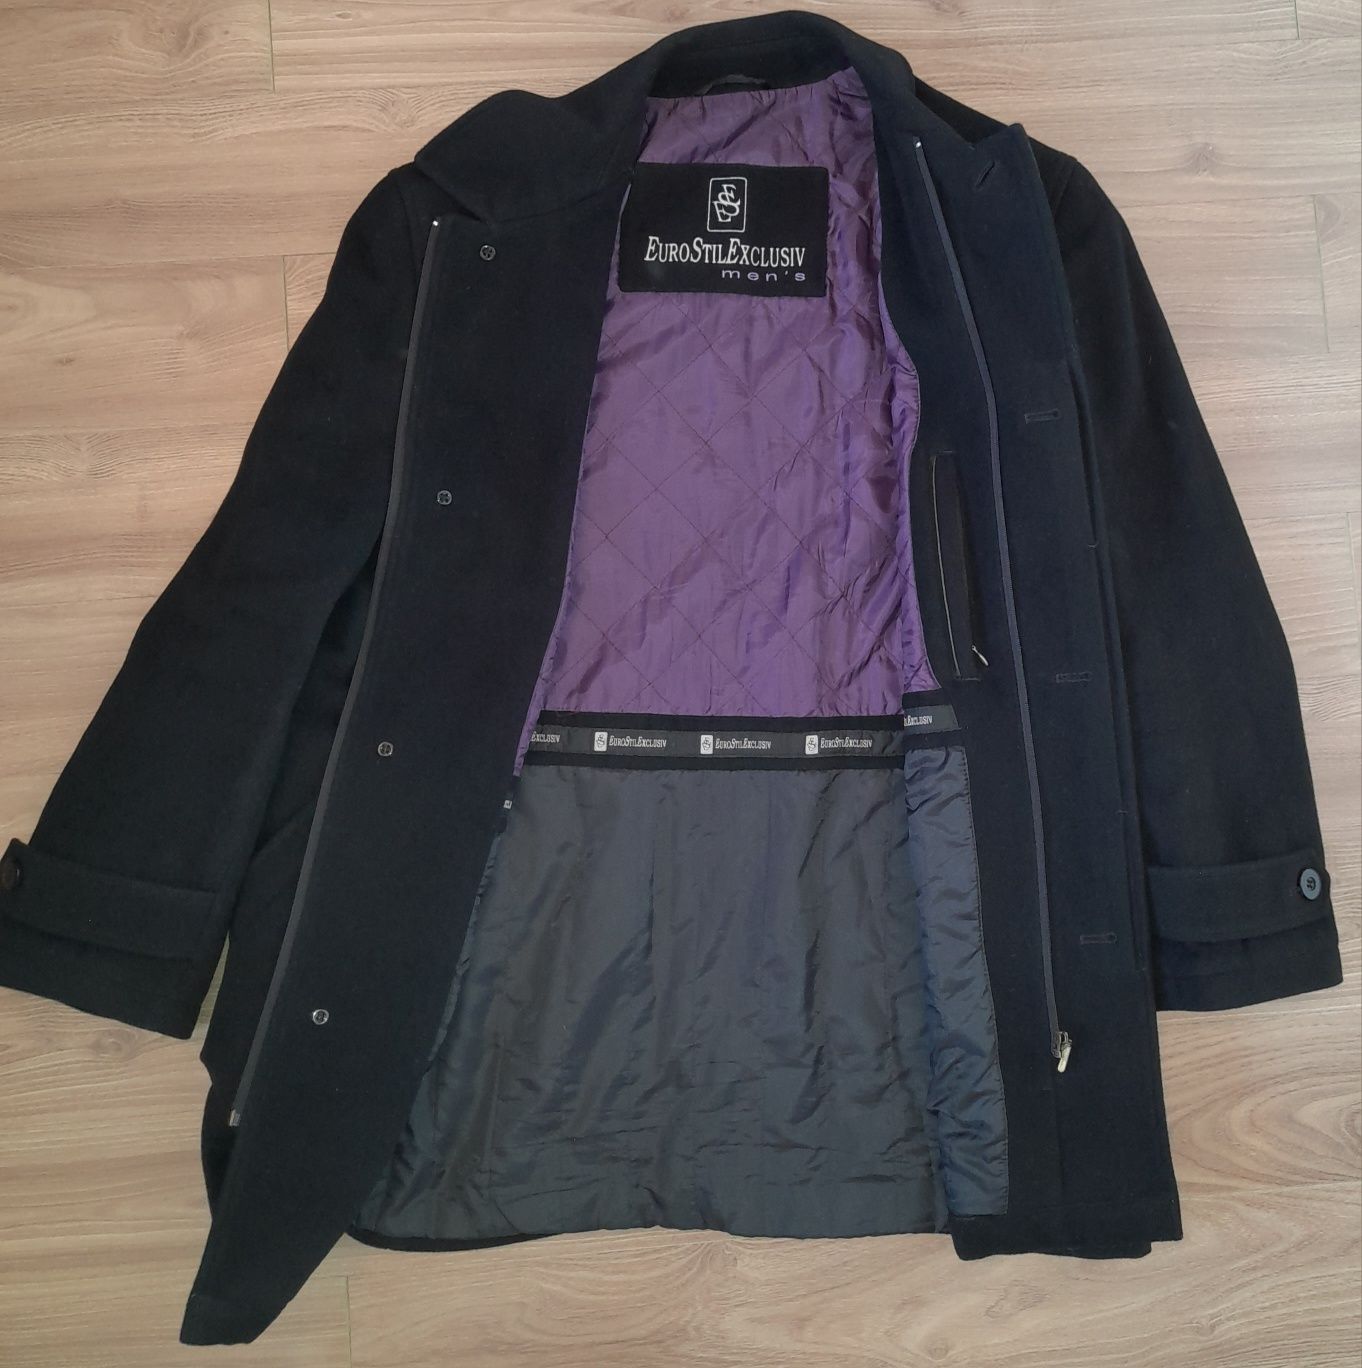 Palton negru ,bărbați, marca Euro style exclusive,masura xxl